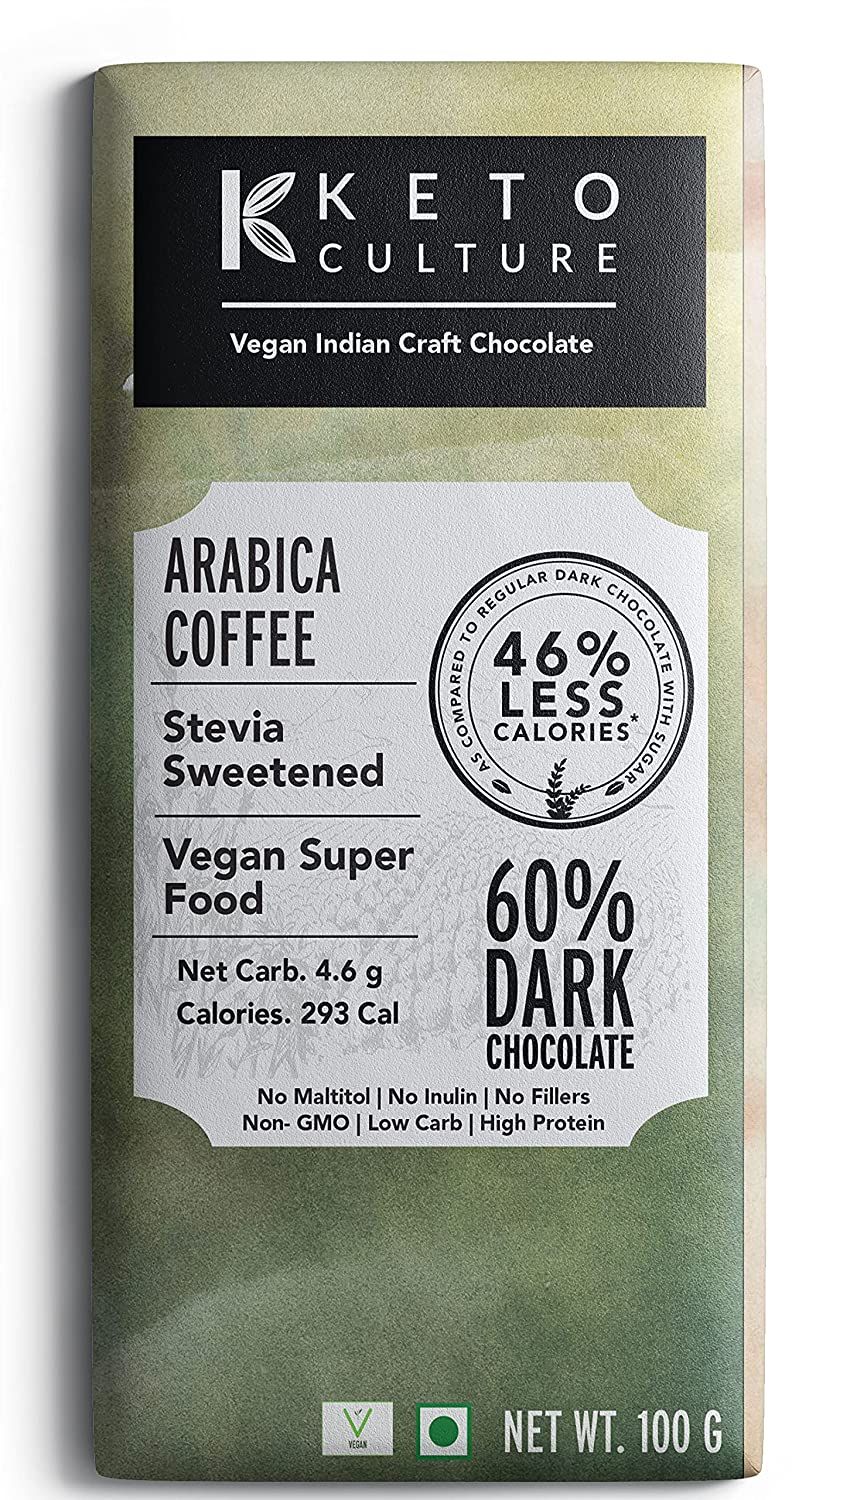 Keto Culture Arabica Coffee Vegan Dark Chocolate Image